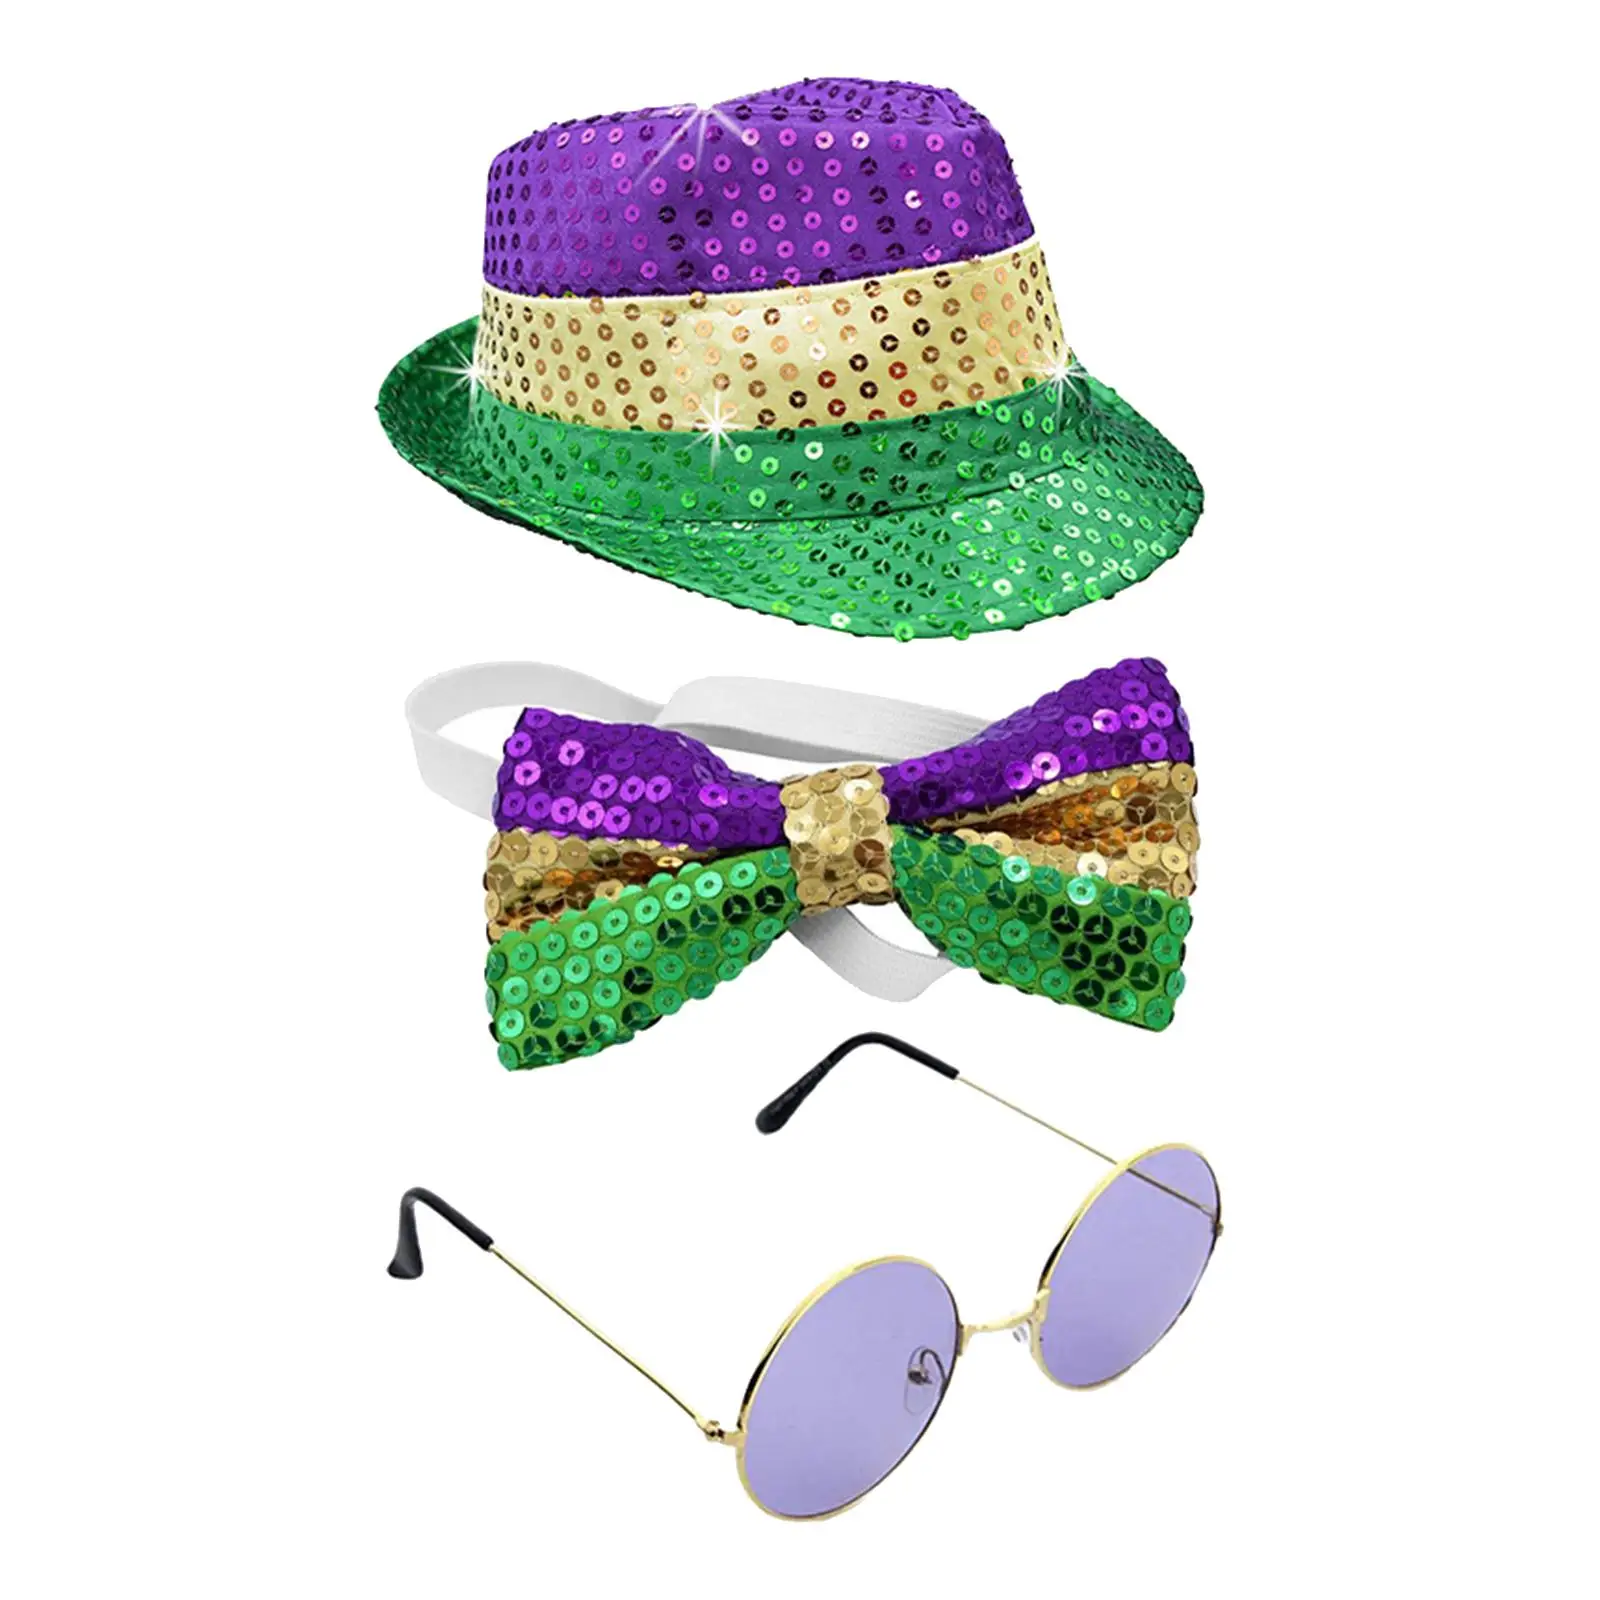 Classic Panama Jazz Top Hat Headgear Sun Hat Tie Fedoras Caps Gentleman Jazz Cap for Costume Clothes Accessories Party